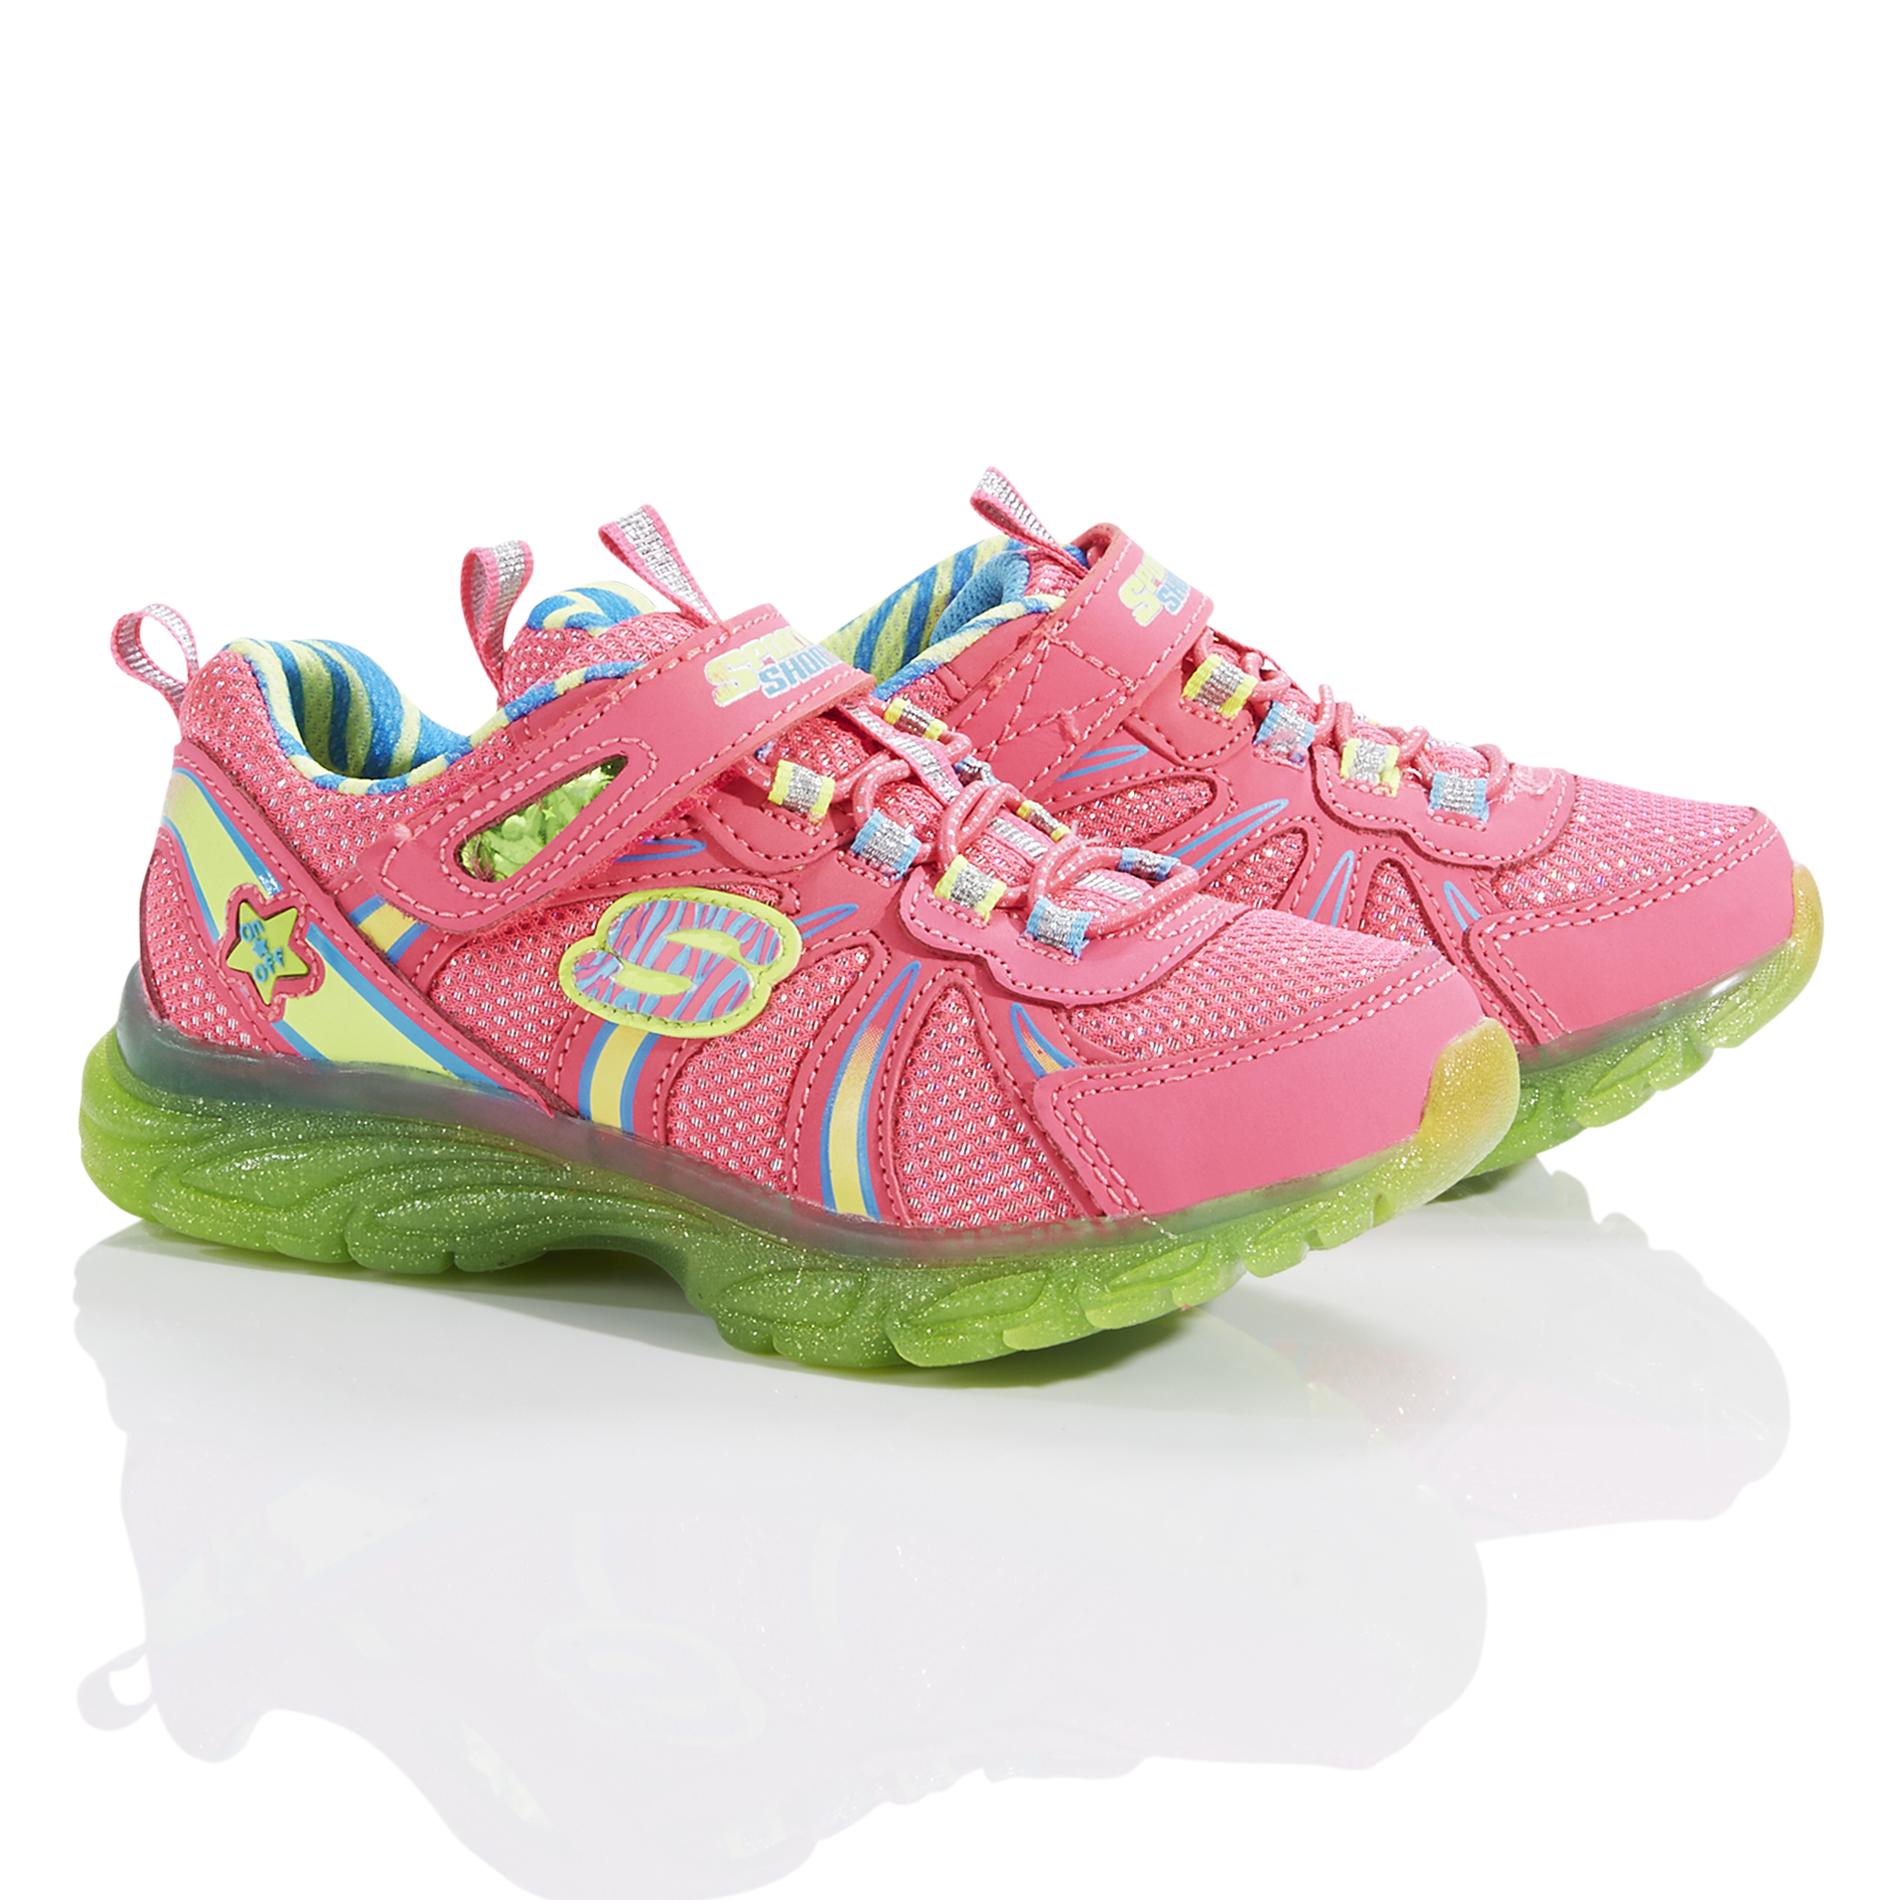 Skechers Girl's Spark Upz Lights Shorty Sporty Light-Up Pink/Multi Athletic Shoes